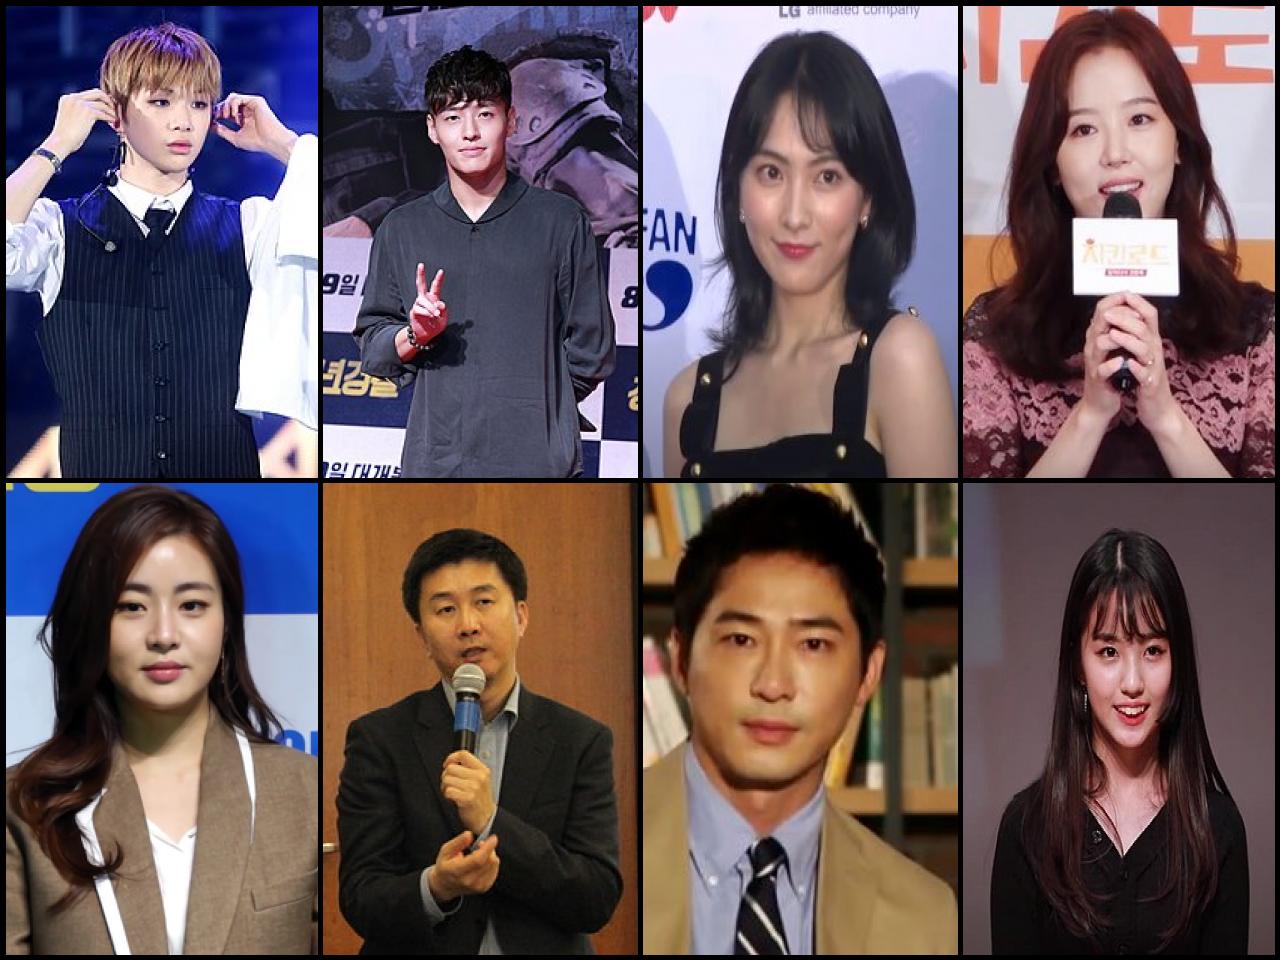 List of Famous people named <b>Kang</b>